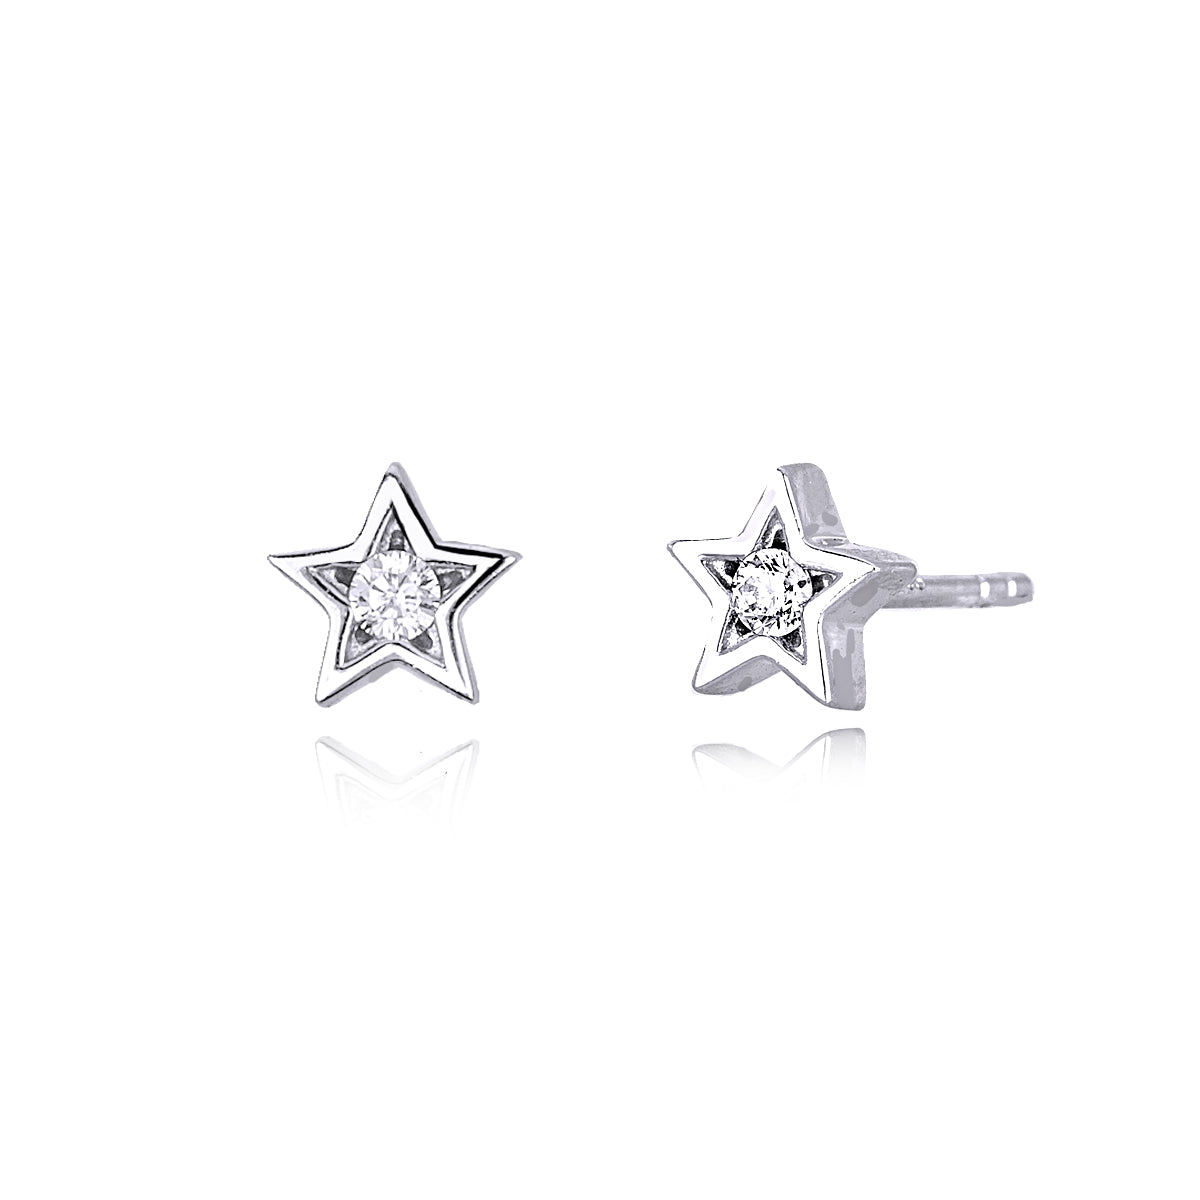 MABINA - Stella earrings